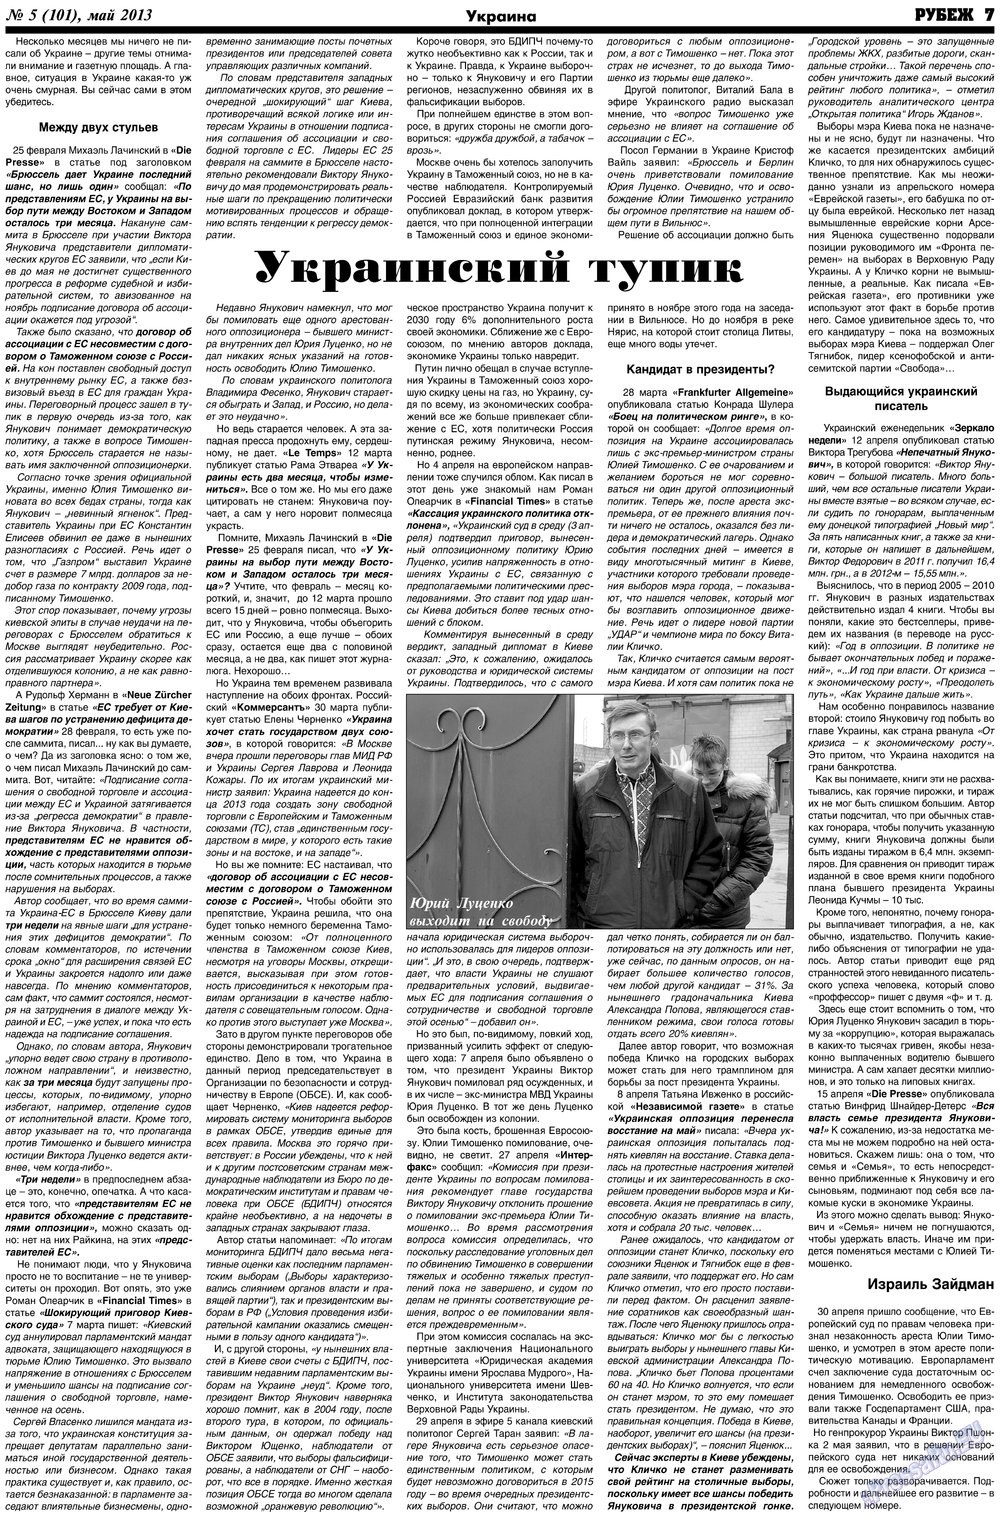 Рубеж, газета. 2013 №5 стр.7